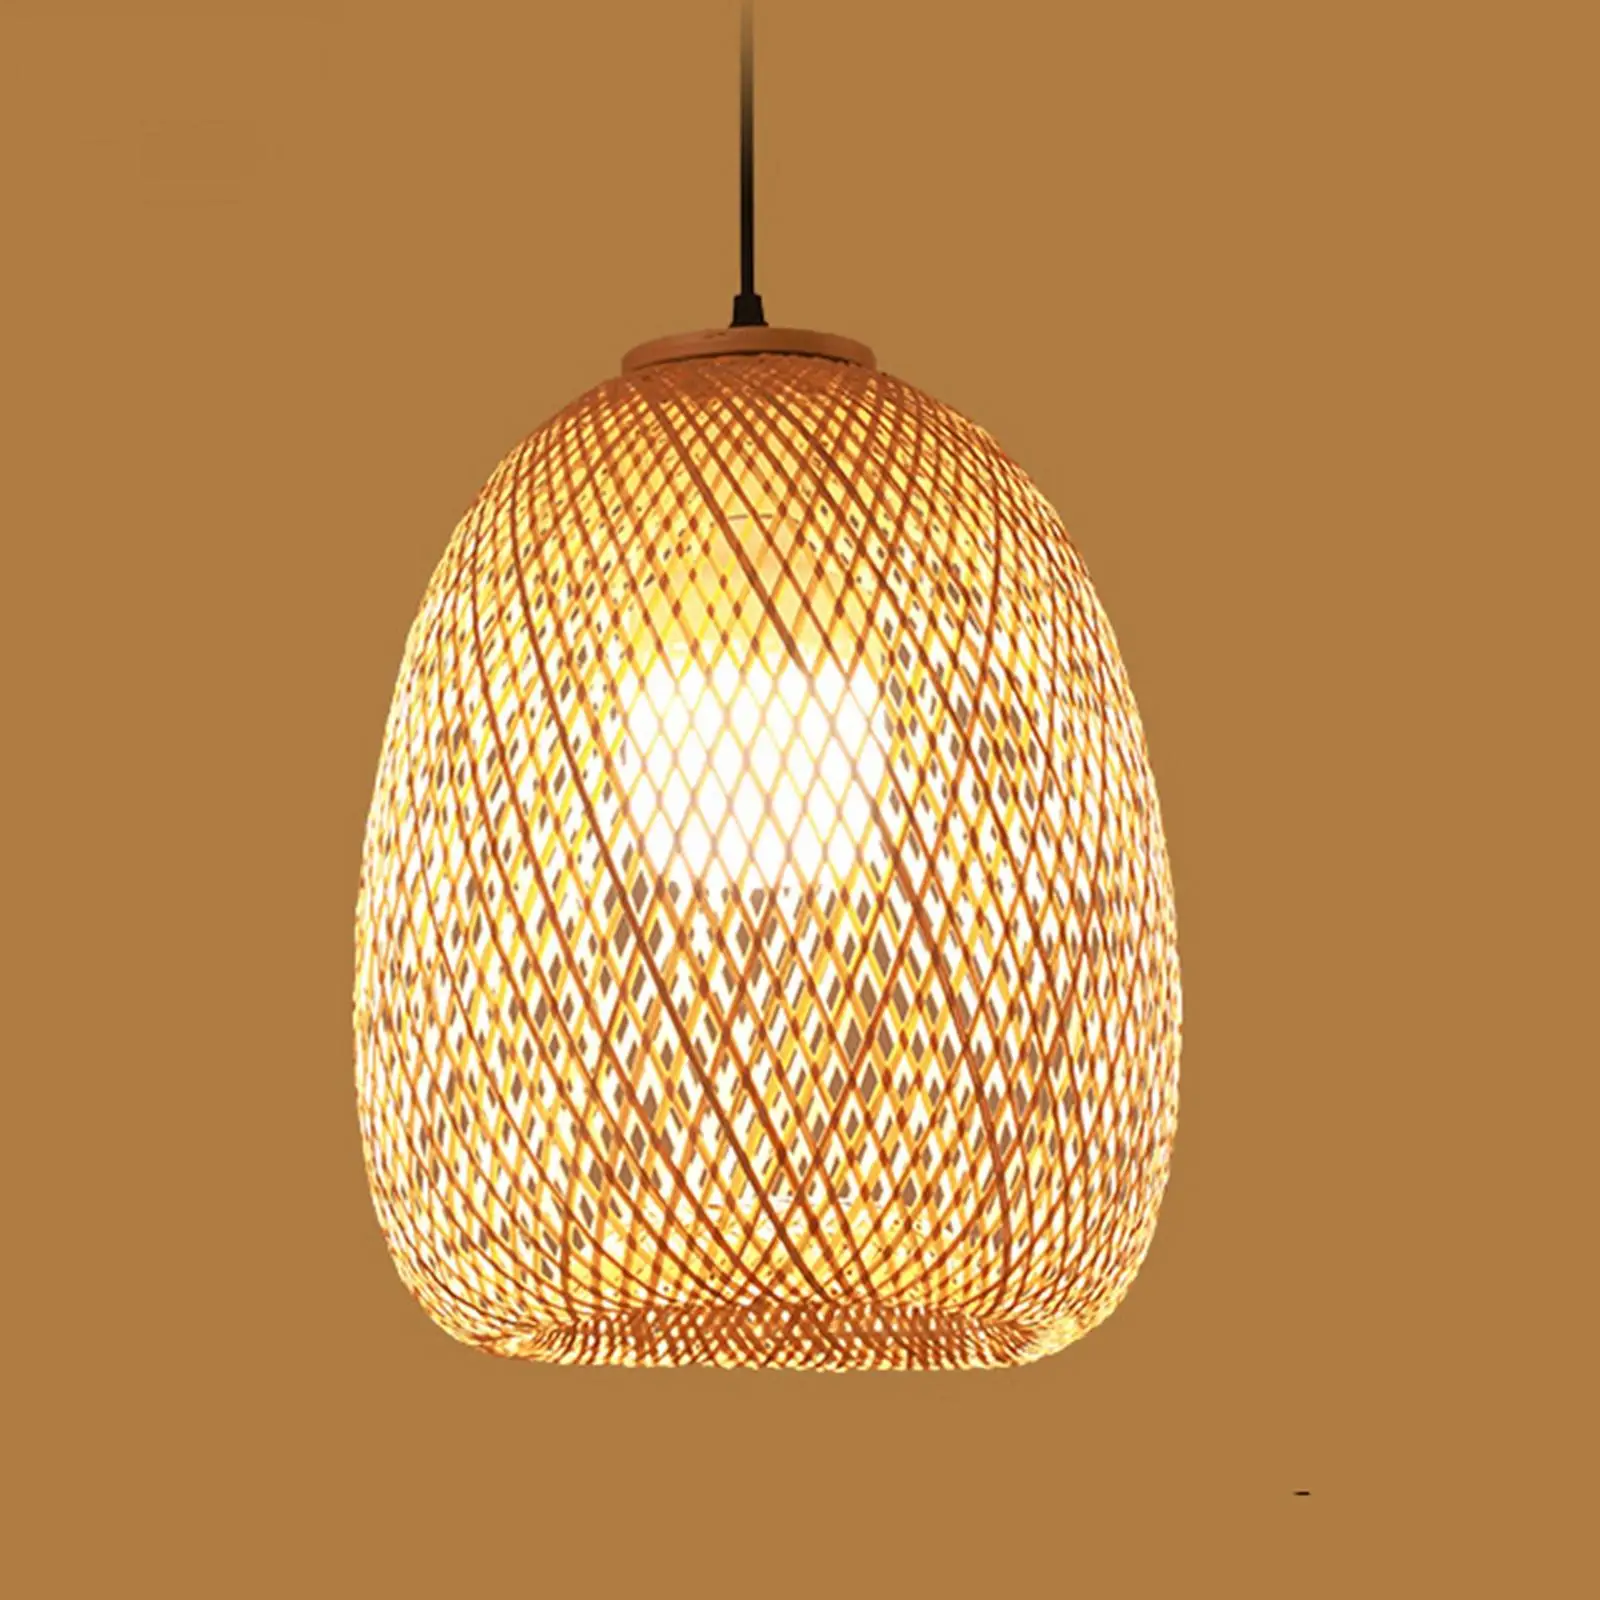 Rattan Pendant Light, Hanging Light Ceiling Lighting Fixture, Bamboo Wicker Lamp Shade, for Farmhouse Cafe Teahouse Bar